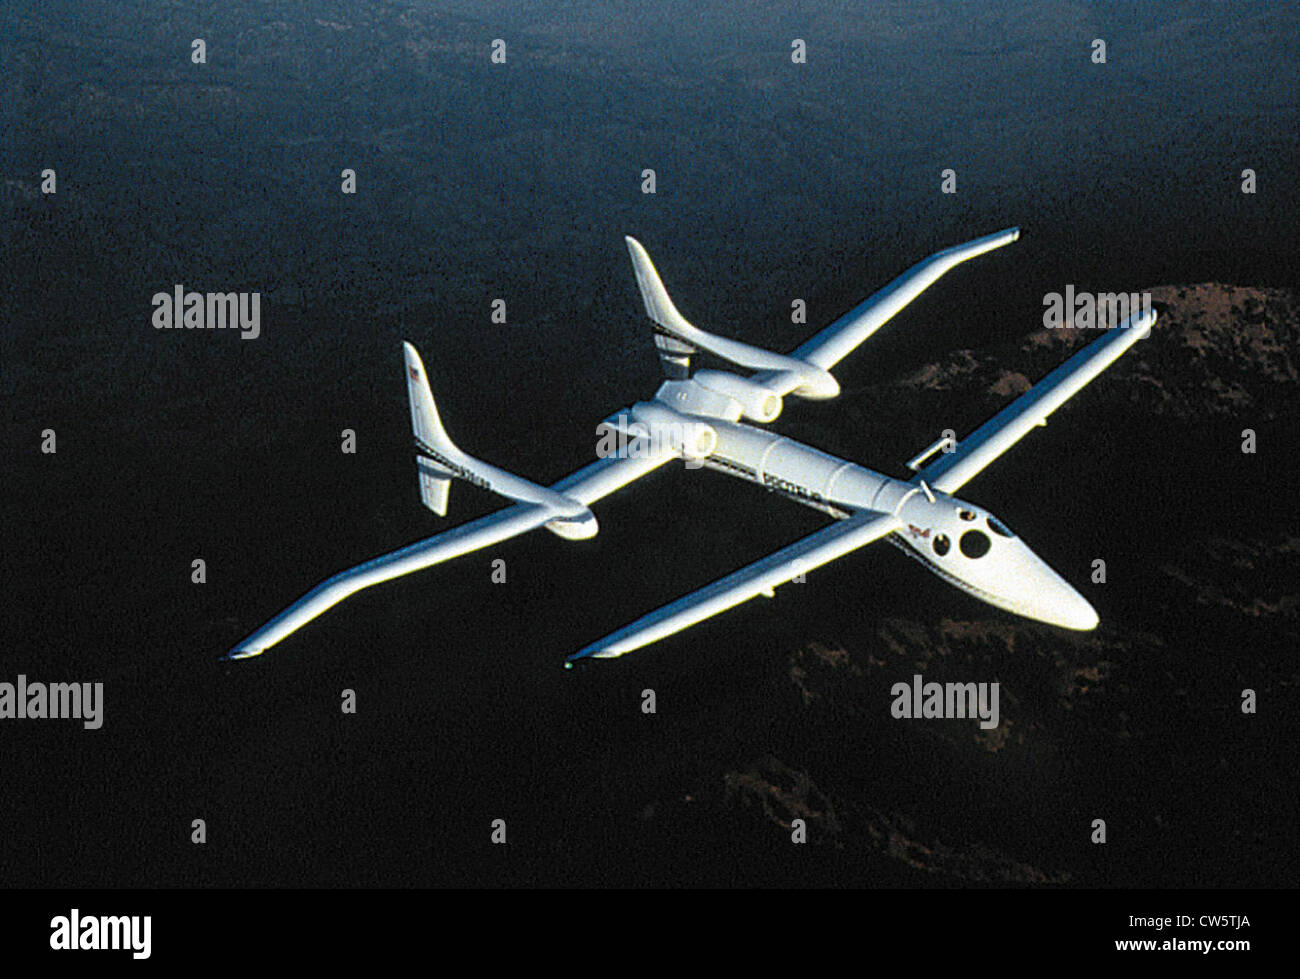 The Proteus aircraft Stock Photo